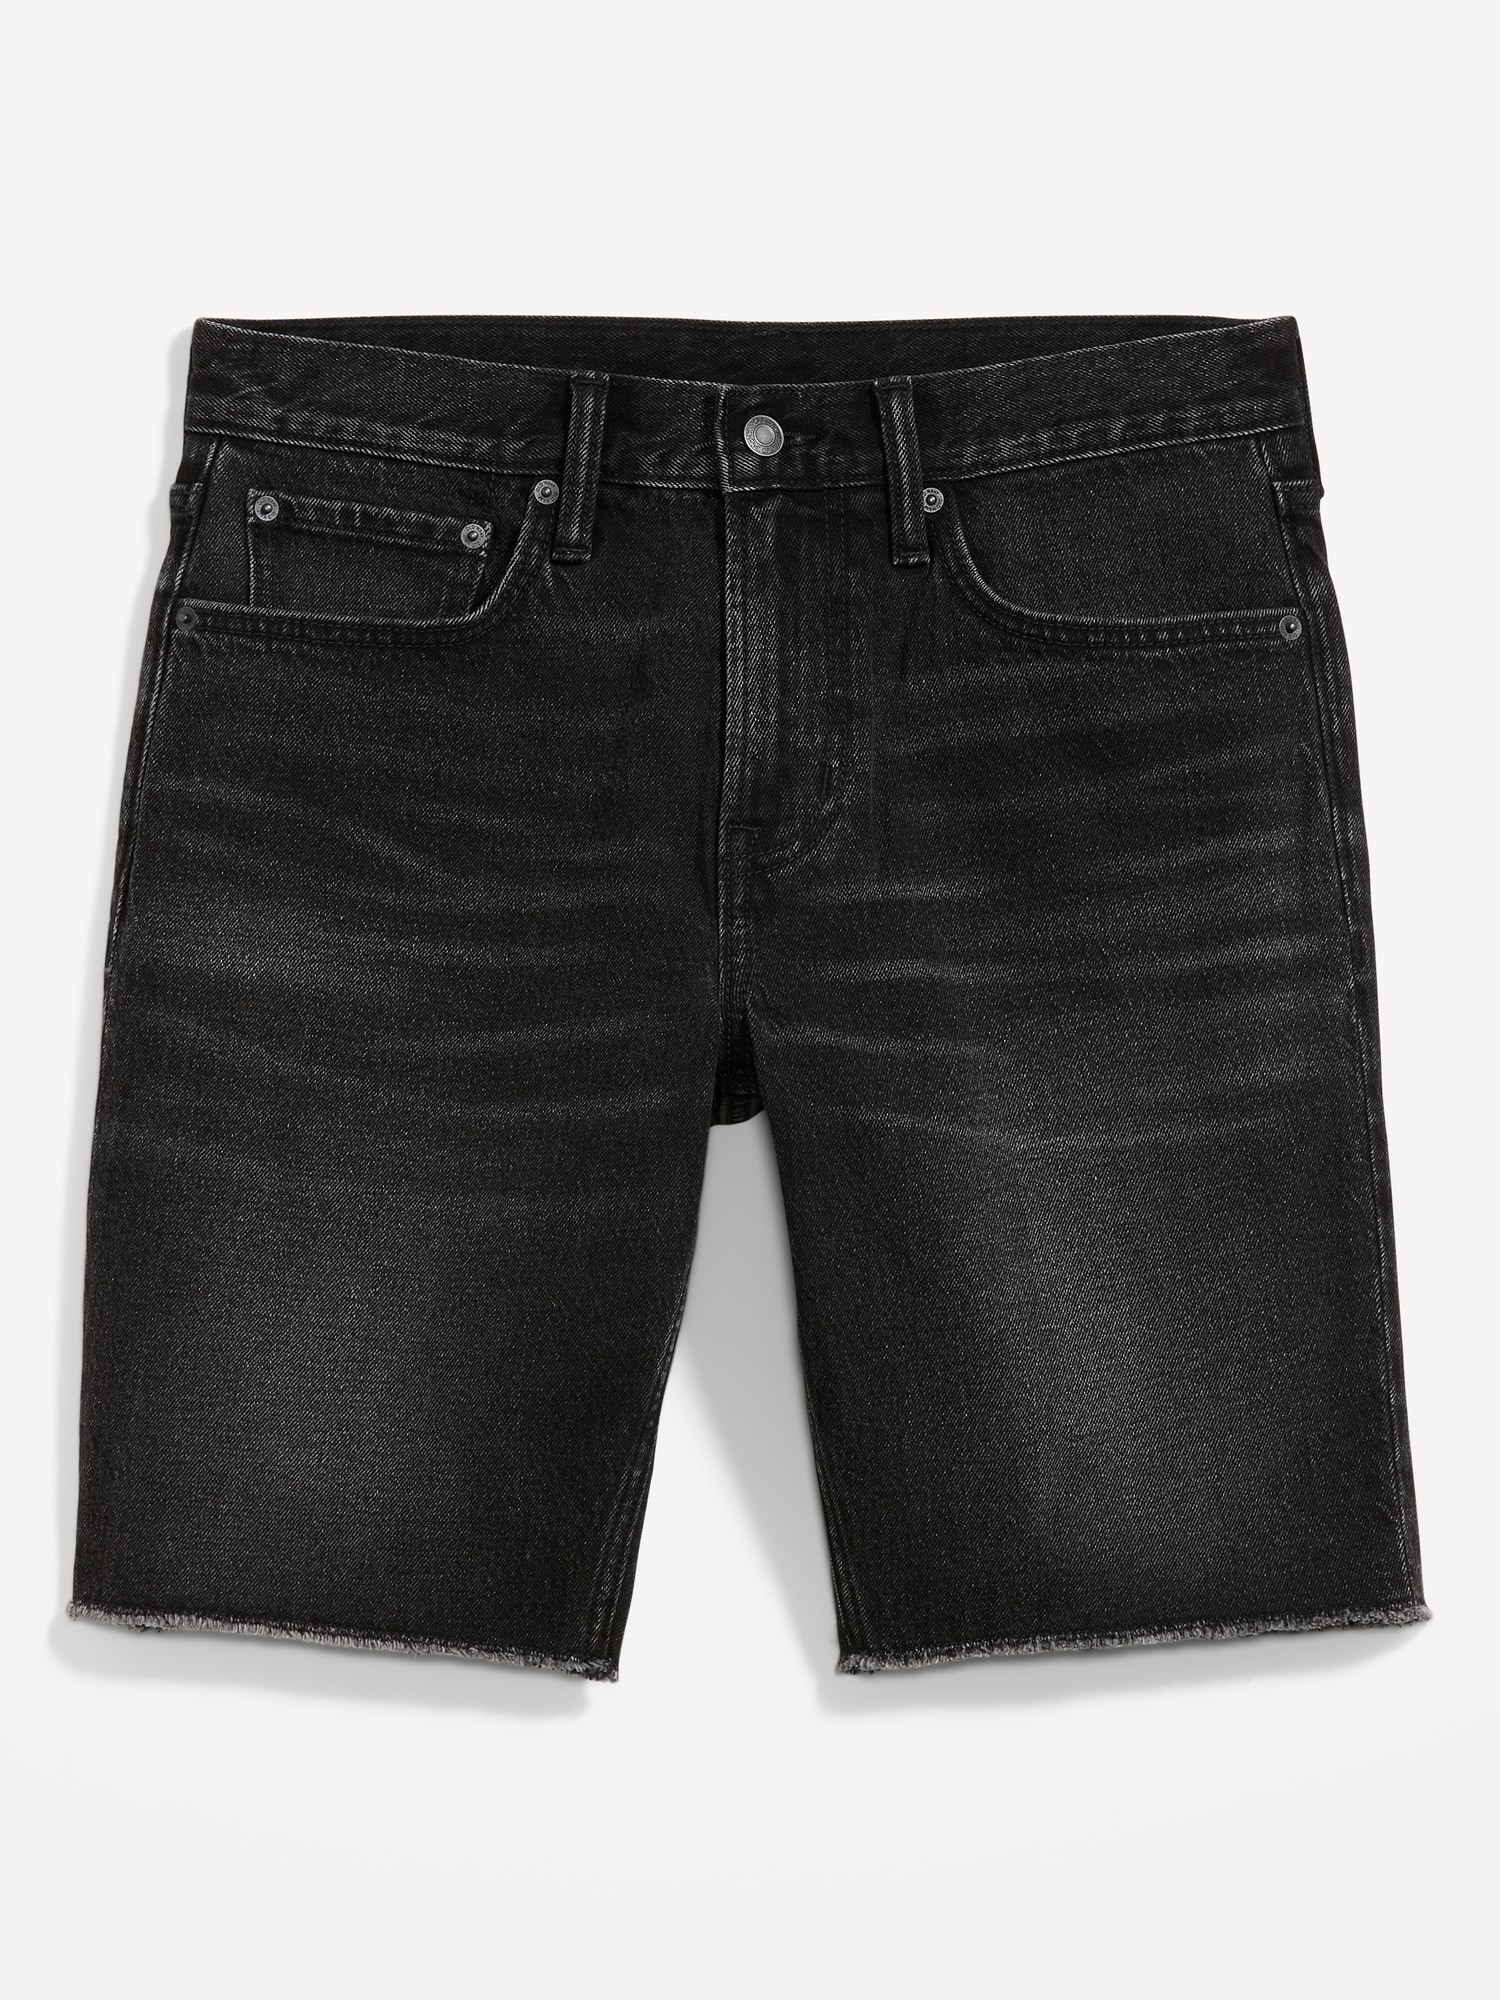 Slim Built-In Flex Black Cut-Off Jean Shorts -- 9.5-inch inseam | Old Navy